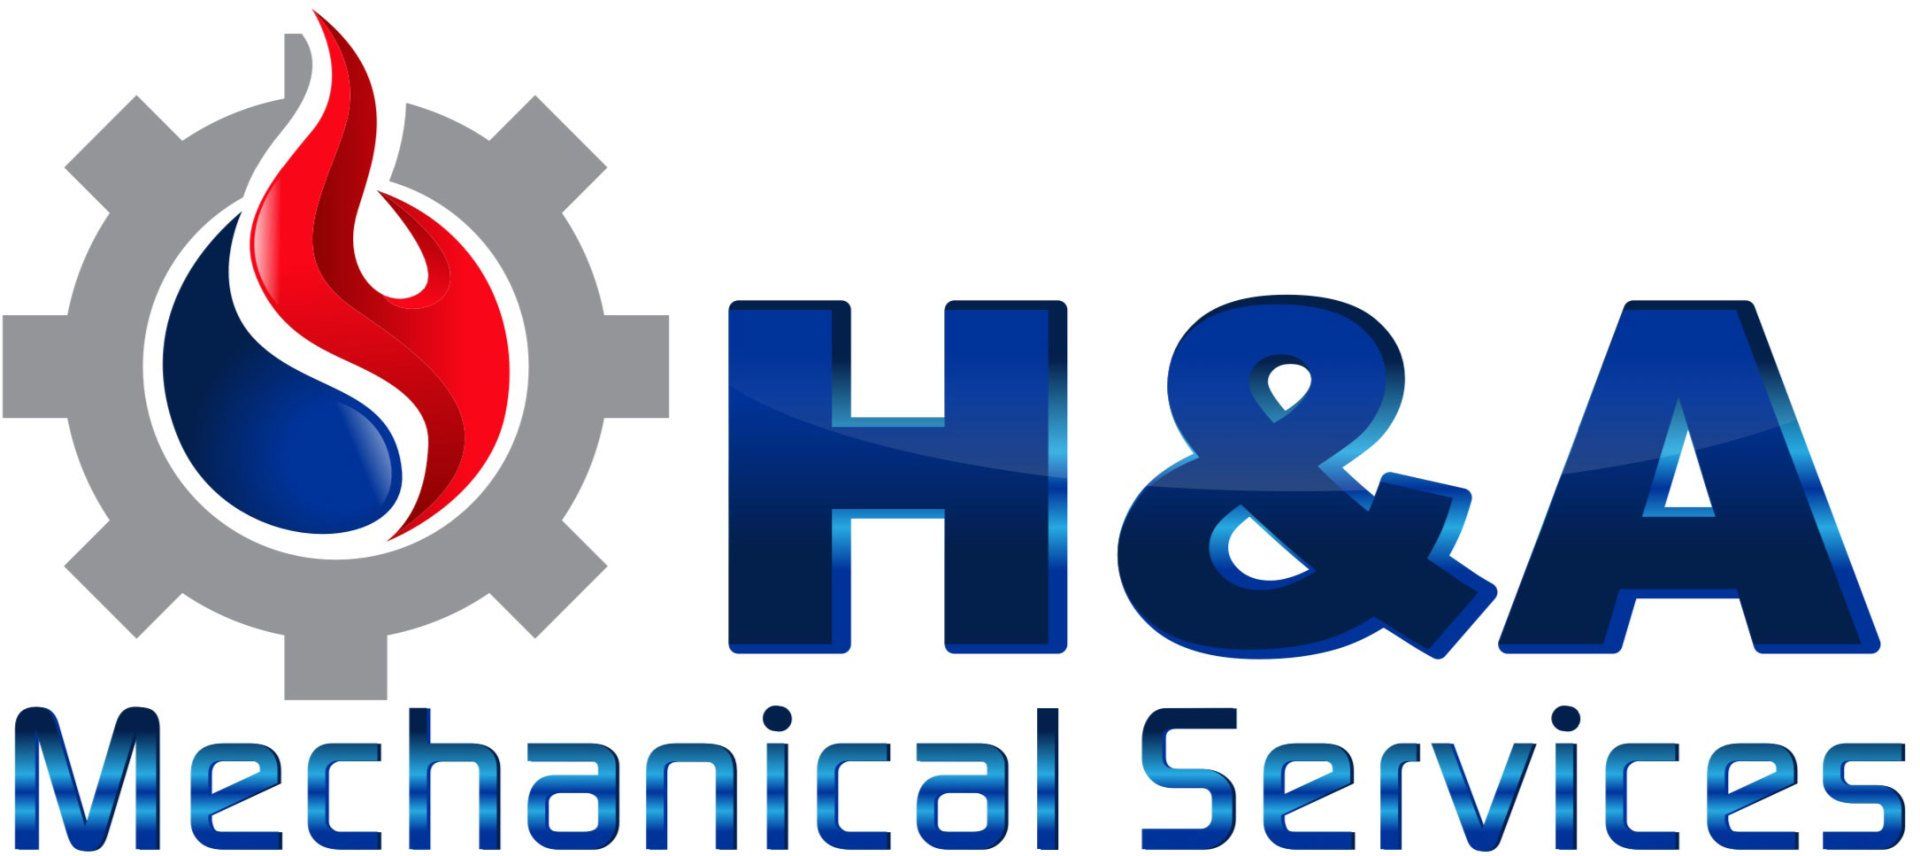 H & A Mechanical Services Inc logo